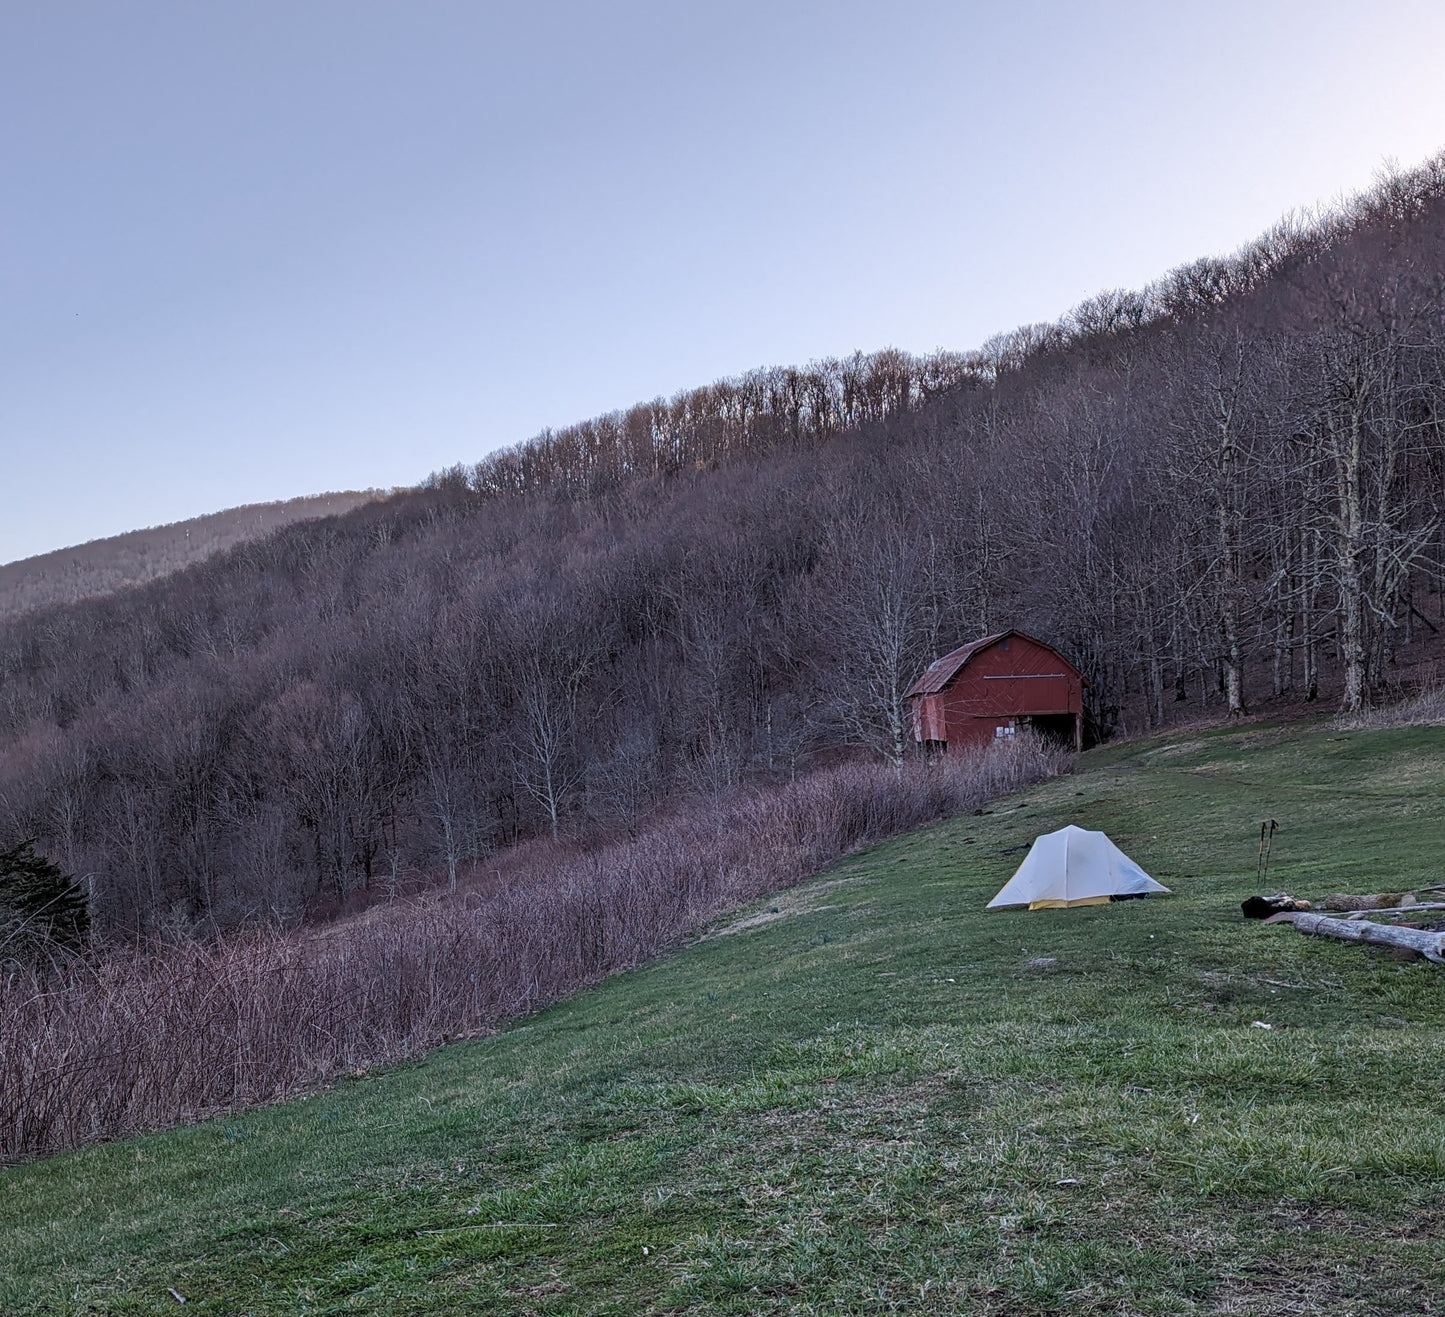 Women's Appalachian Trail Beginner Backpacking Trip- Roan Highlands, TN: 3 Days/2 Nights (2024)